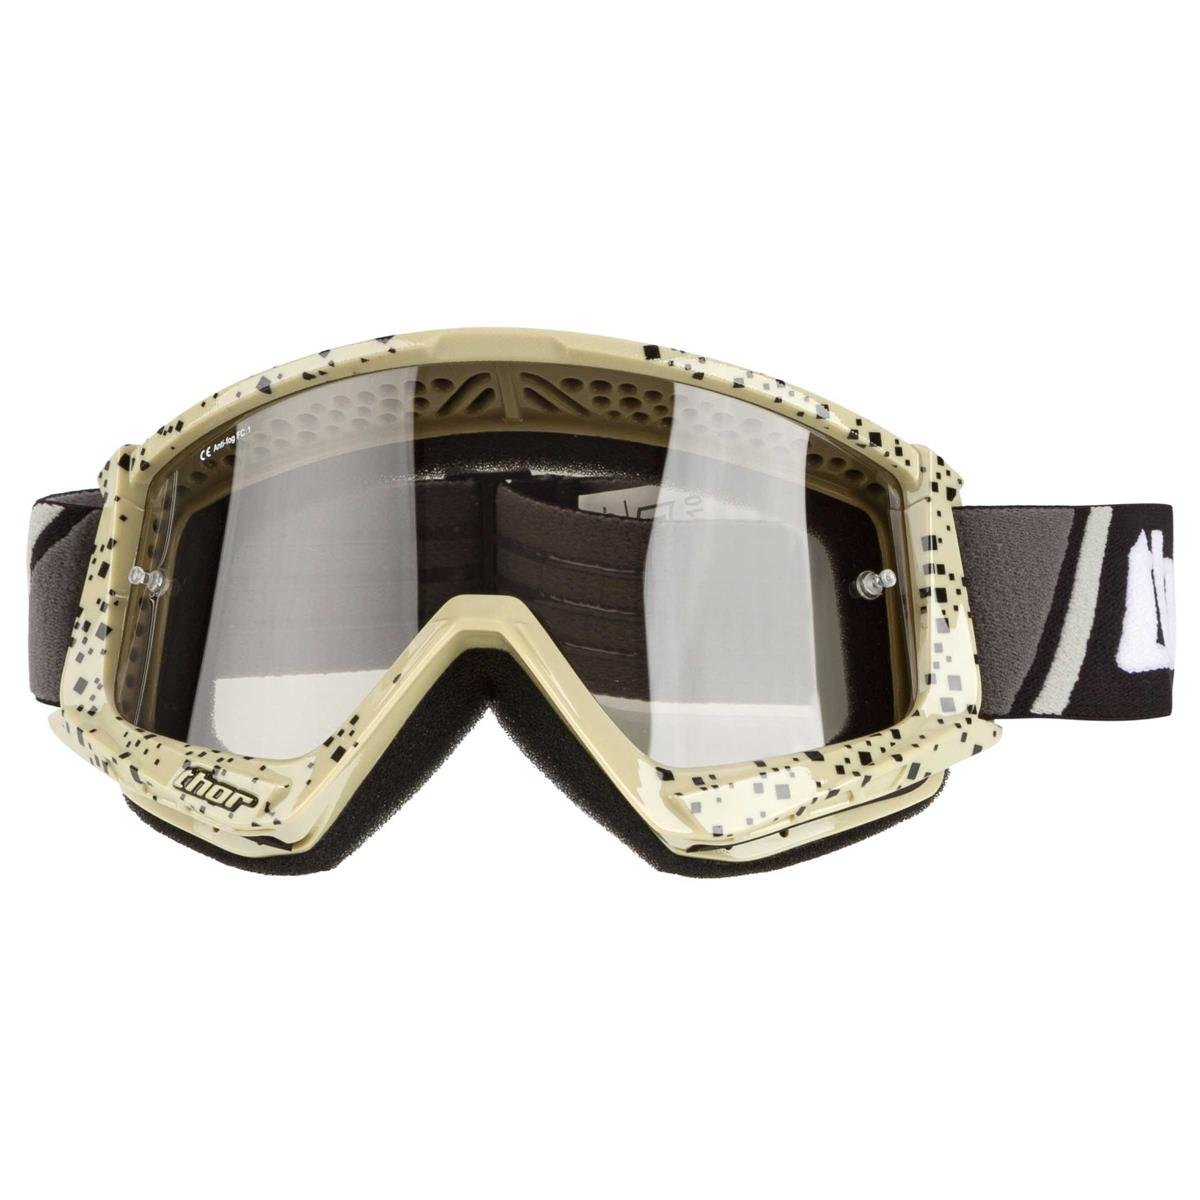 Thor MX Goggle Combat - Sand Blast - Lens Brown Anti-Fog